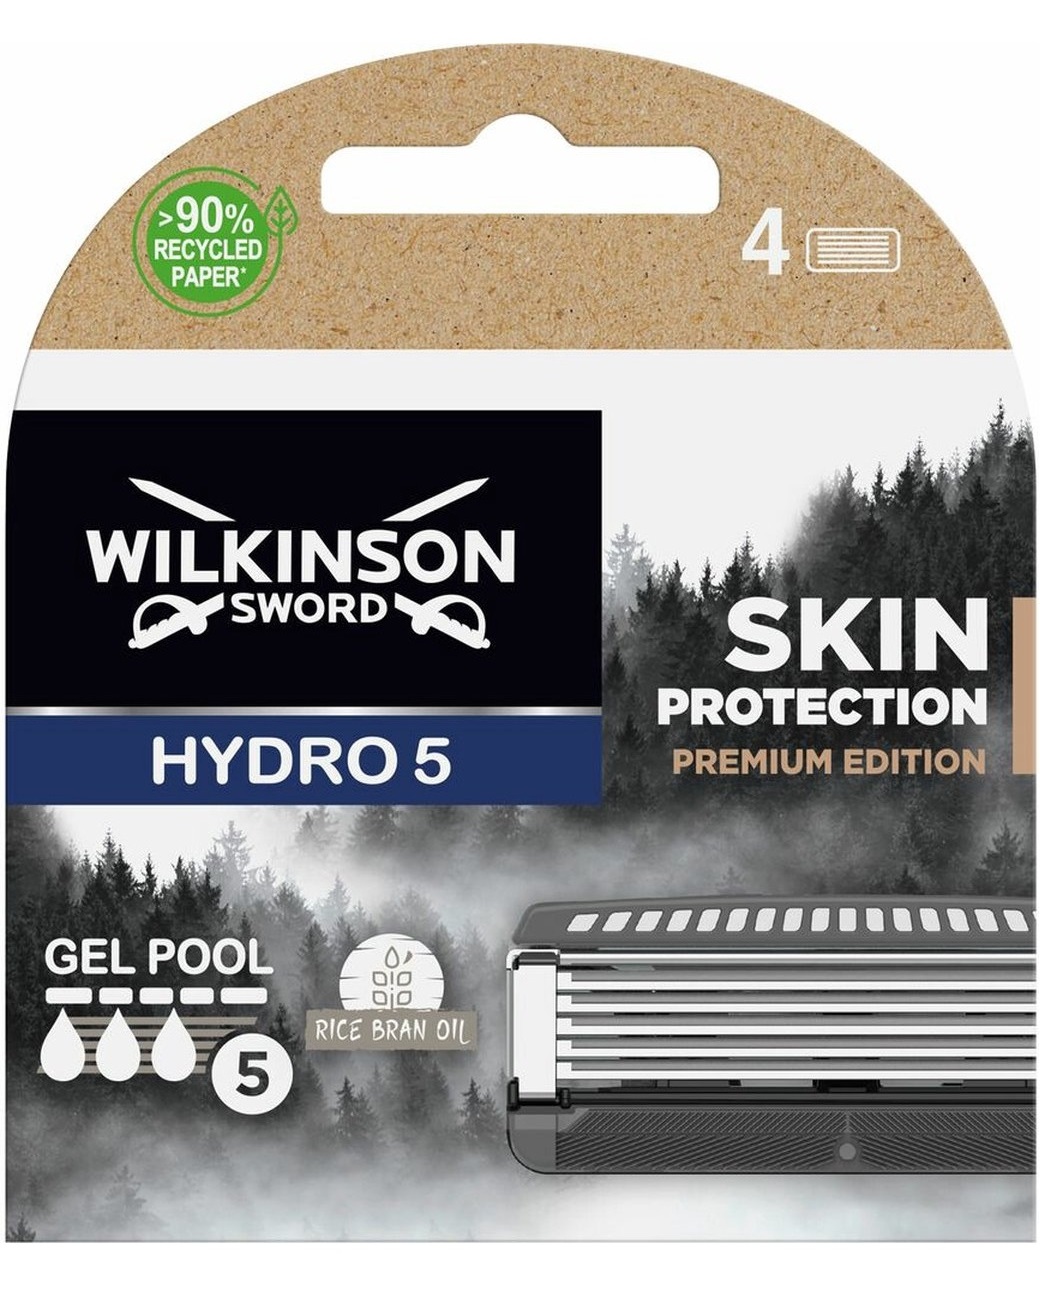 Сменные кассеты для бритв SENSE Wilkinson Sword Hydro 5 Skin Premiun Edition, 4 шт сменные кассеты для станка intuition wilkinson sword intuition sensitive care 4 шт